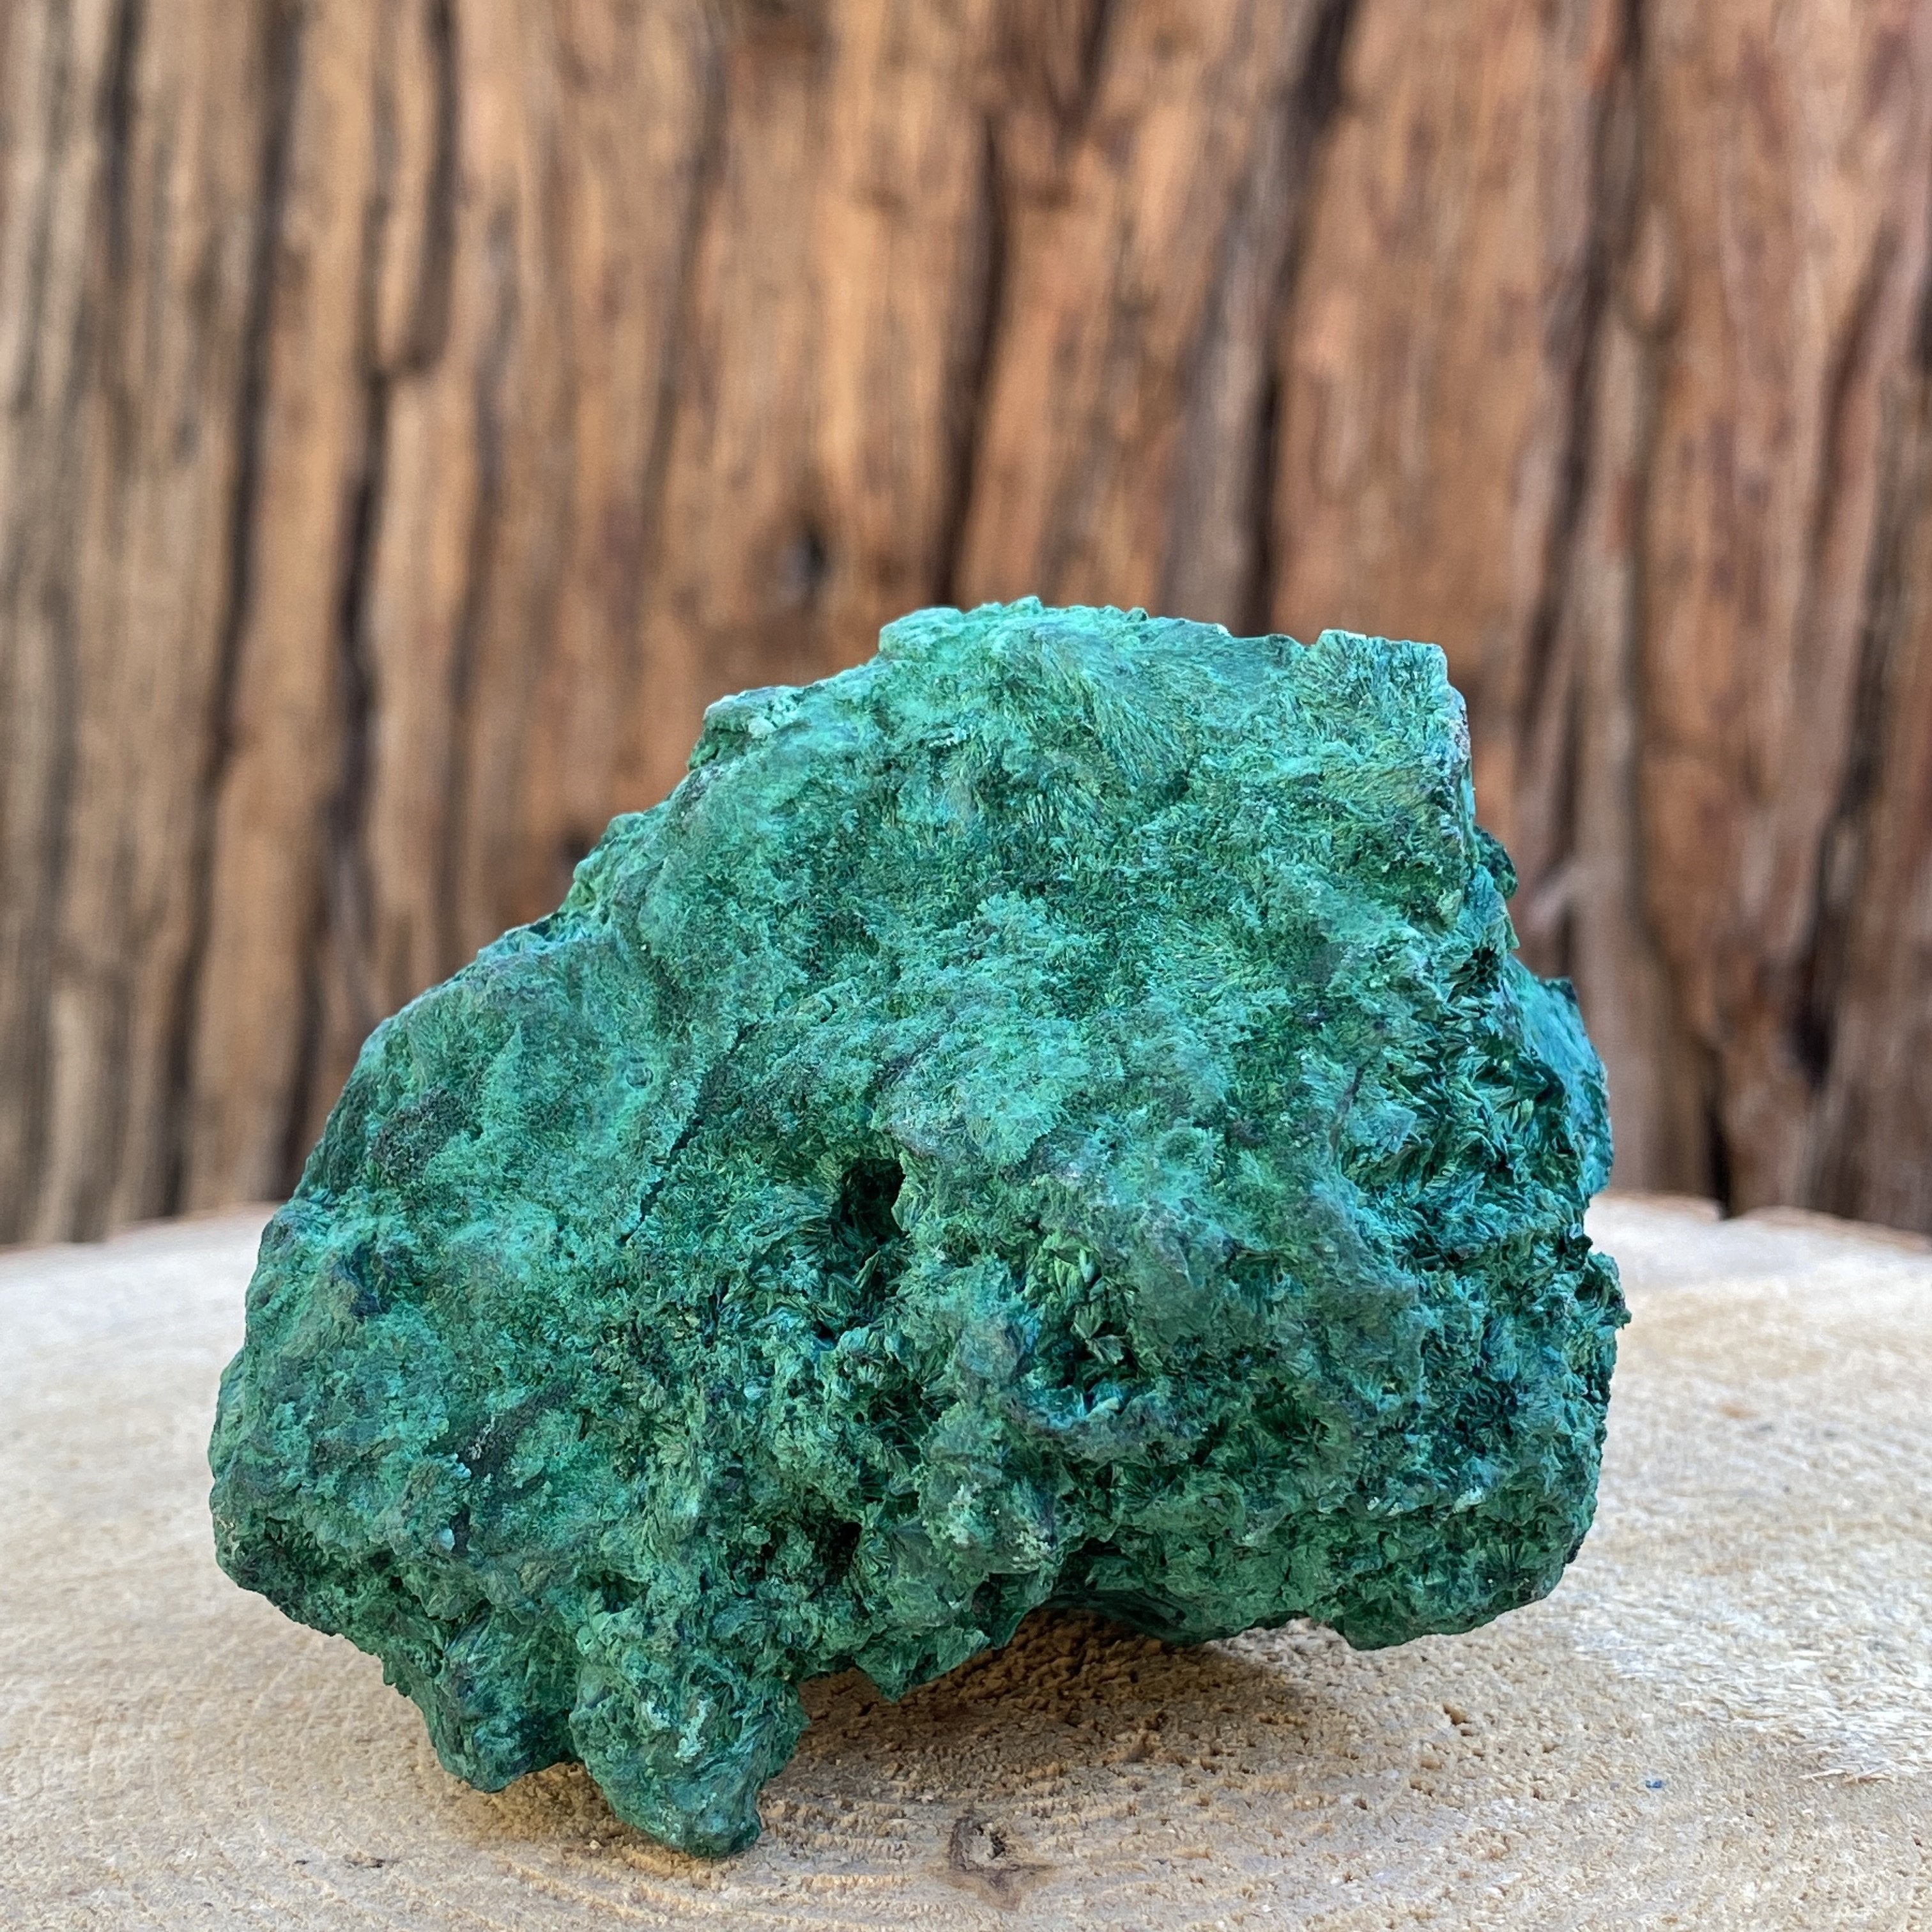 472g 8x7x6cm Green Shiny Malachite from Laos - Locco Decor